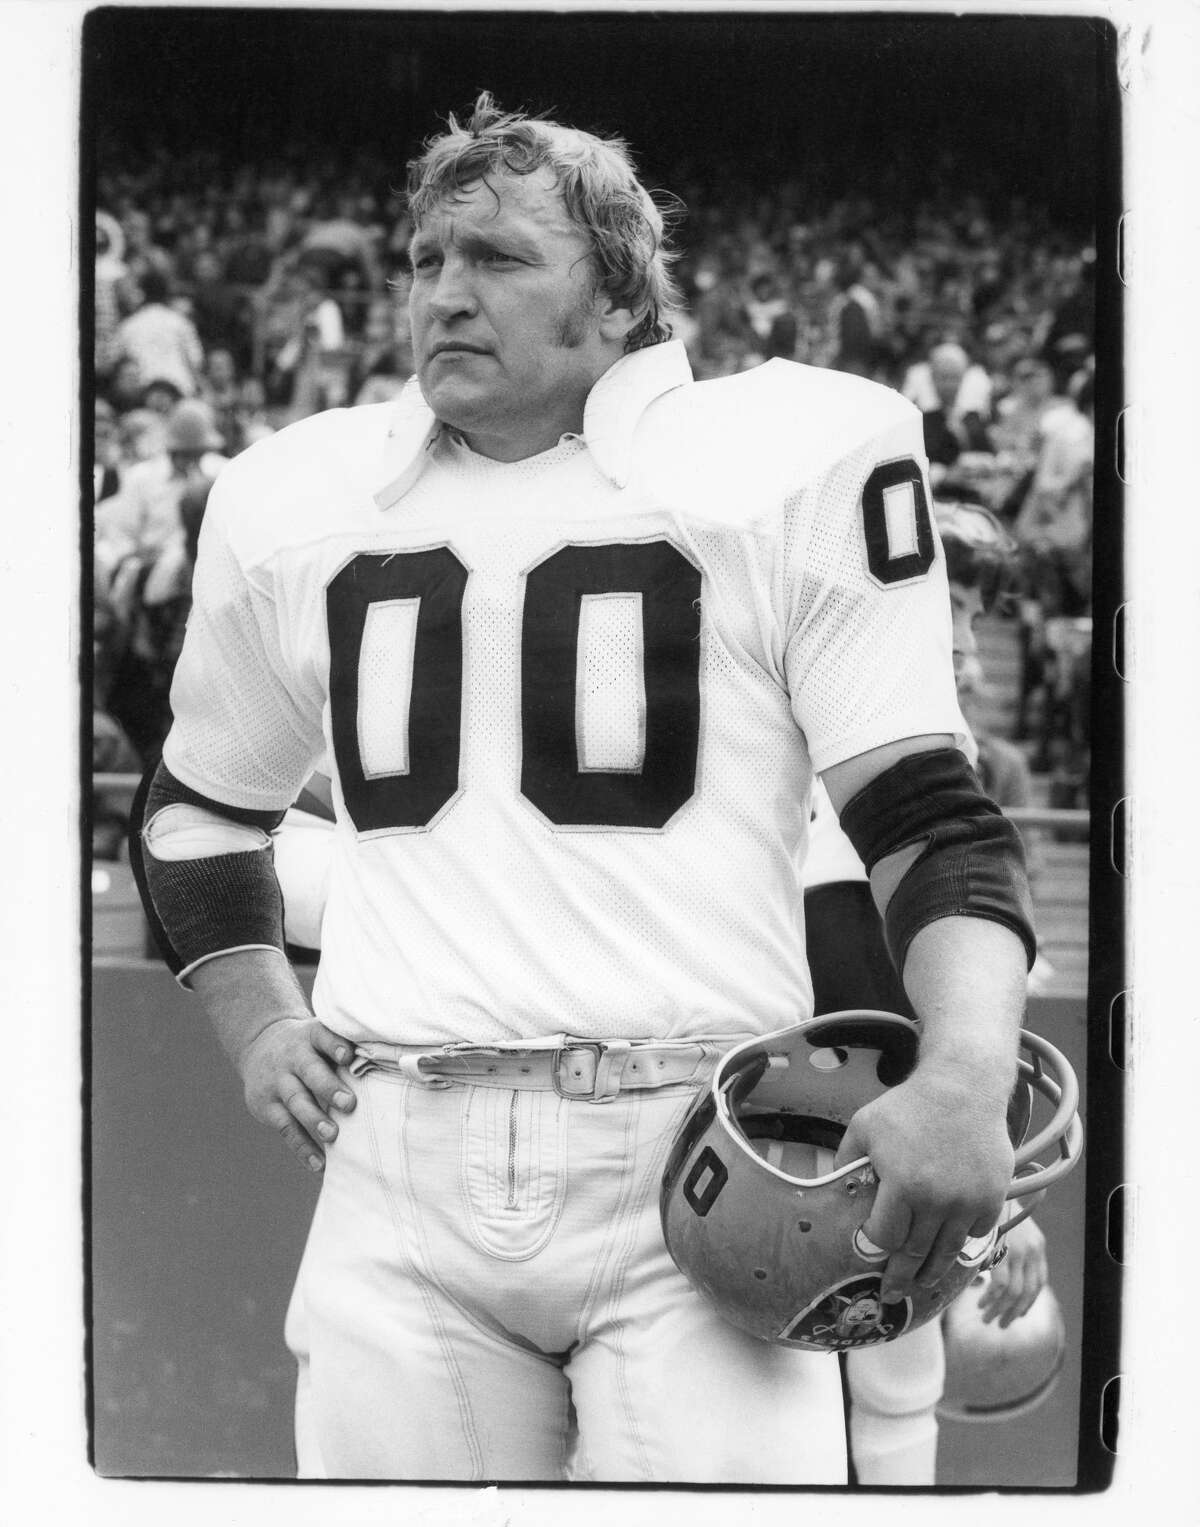 00 -- Raiders' Hall of Famer Jim Otto Notable: Warriors' Robert Parrish, Giants' Jeffrey Leonard